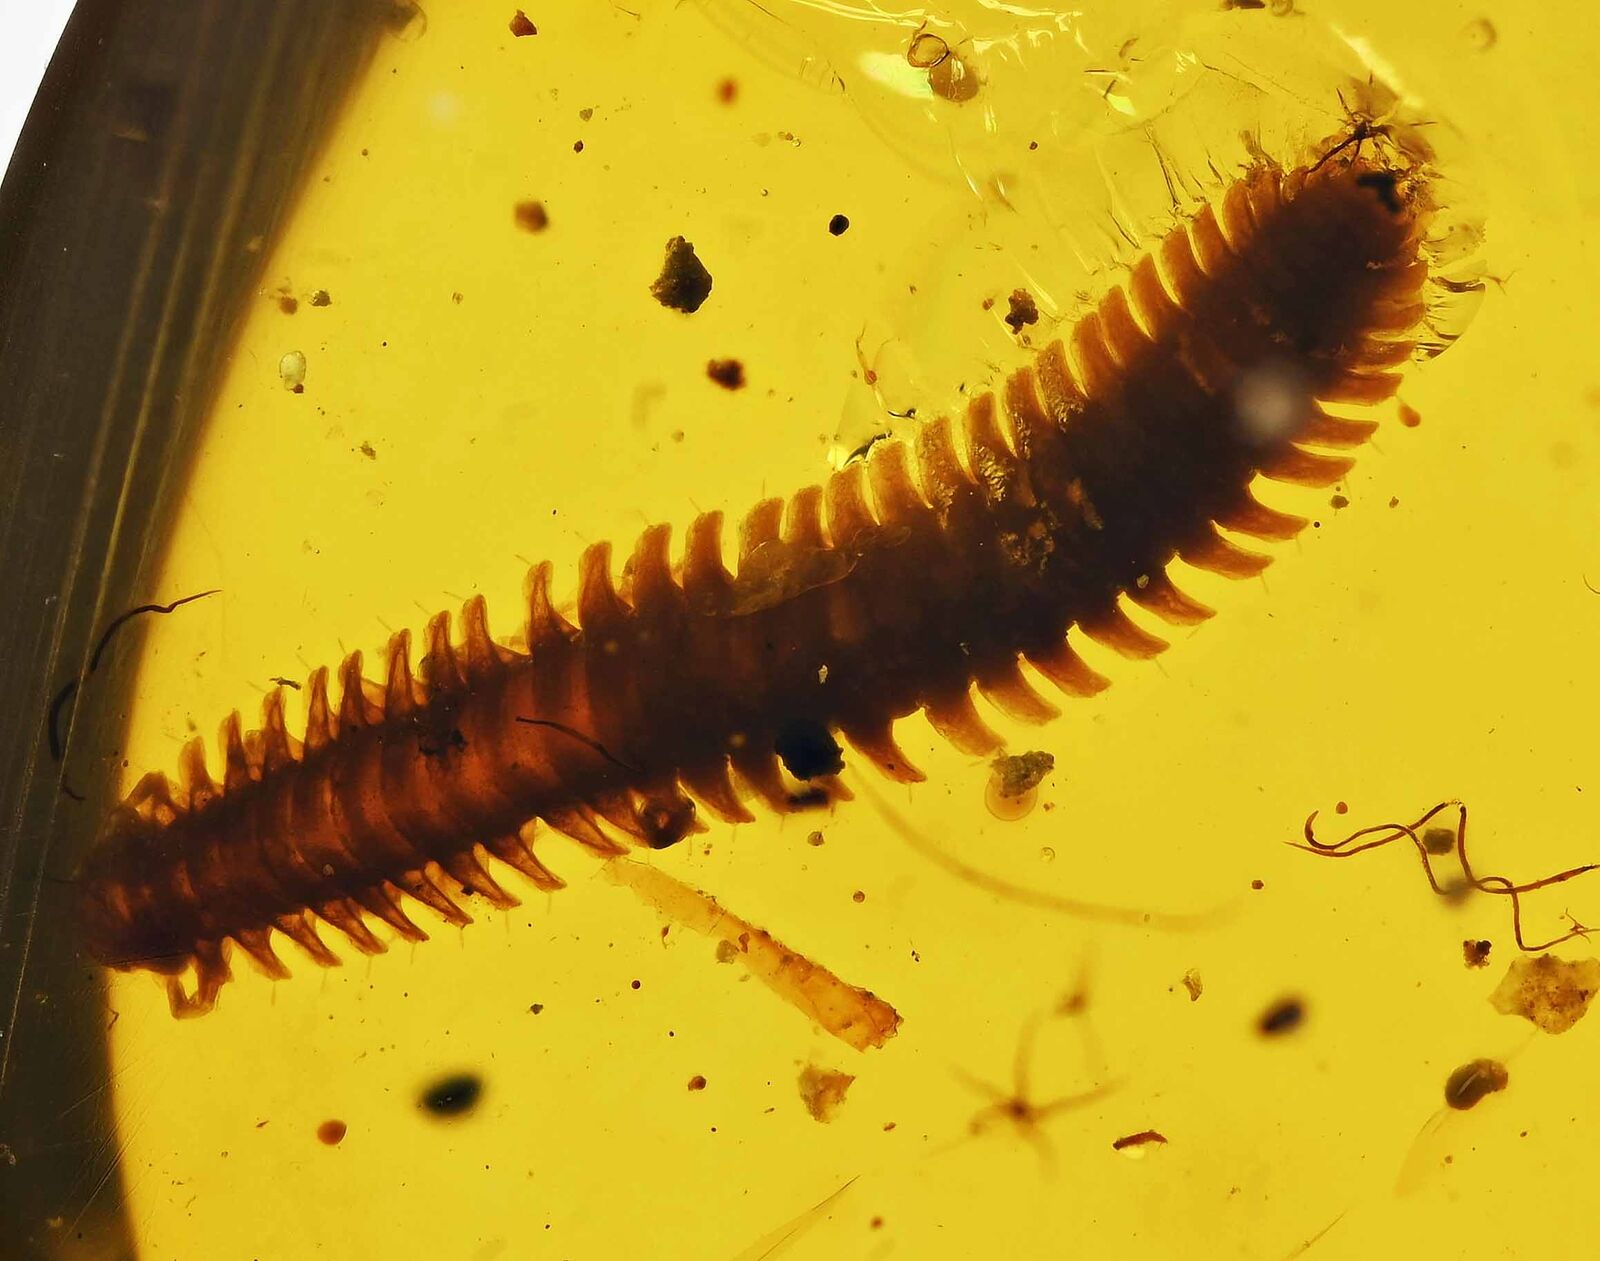 Detailed Platydesmida (Millipede), Fossil Inclusion in Burmese Amber